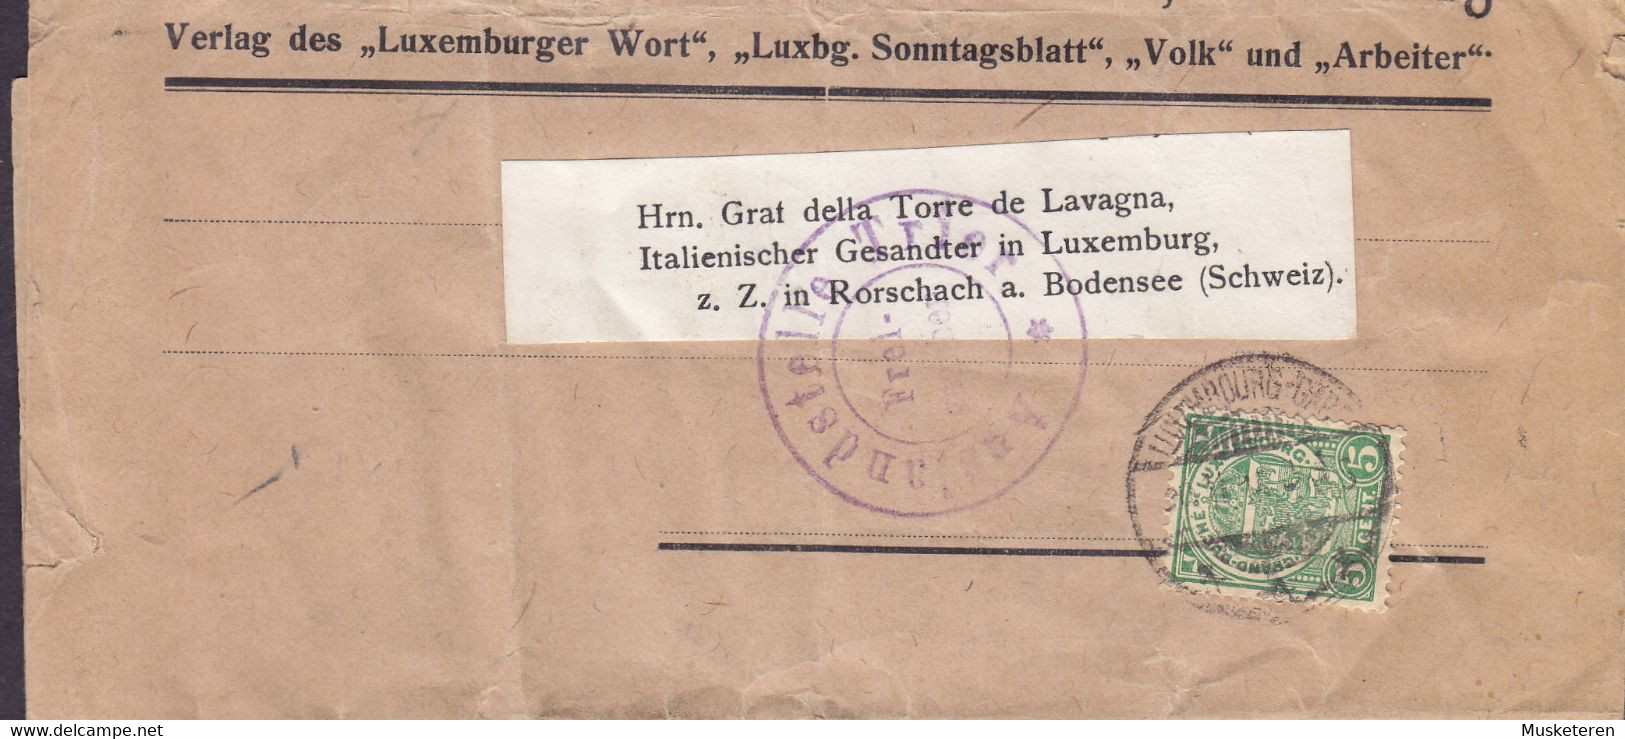 Luxembourg DRUCKEREI ST. PAULUS Wrapper Streifband Bande Journal LUXEMBOURG-GARE 1915 RORSCHACH Suisse CENSOR - 1907-24 Scudetto